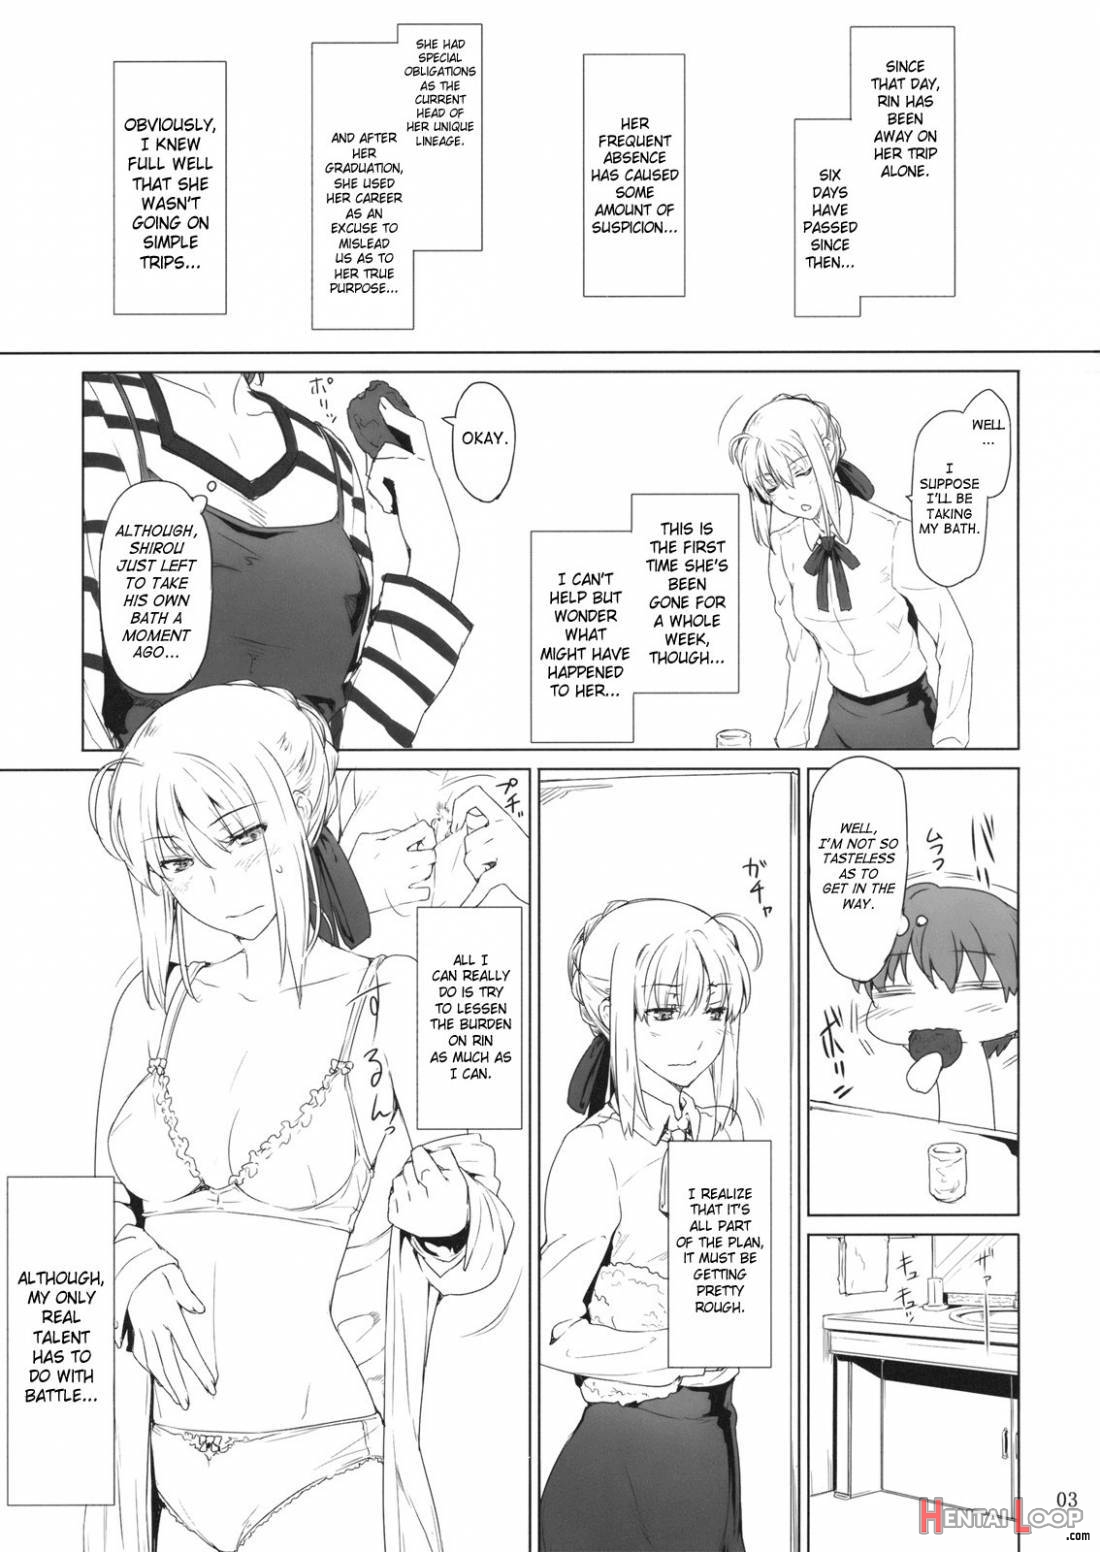 Tohsaka-ke no Kakei Jijou 9 page 2